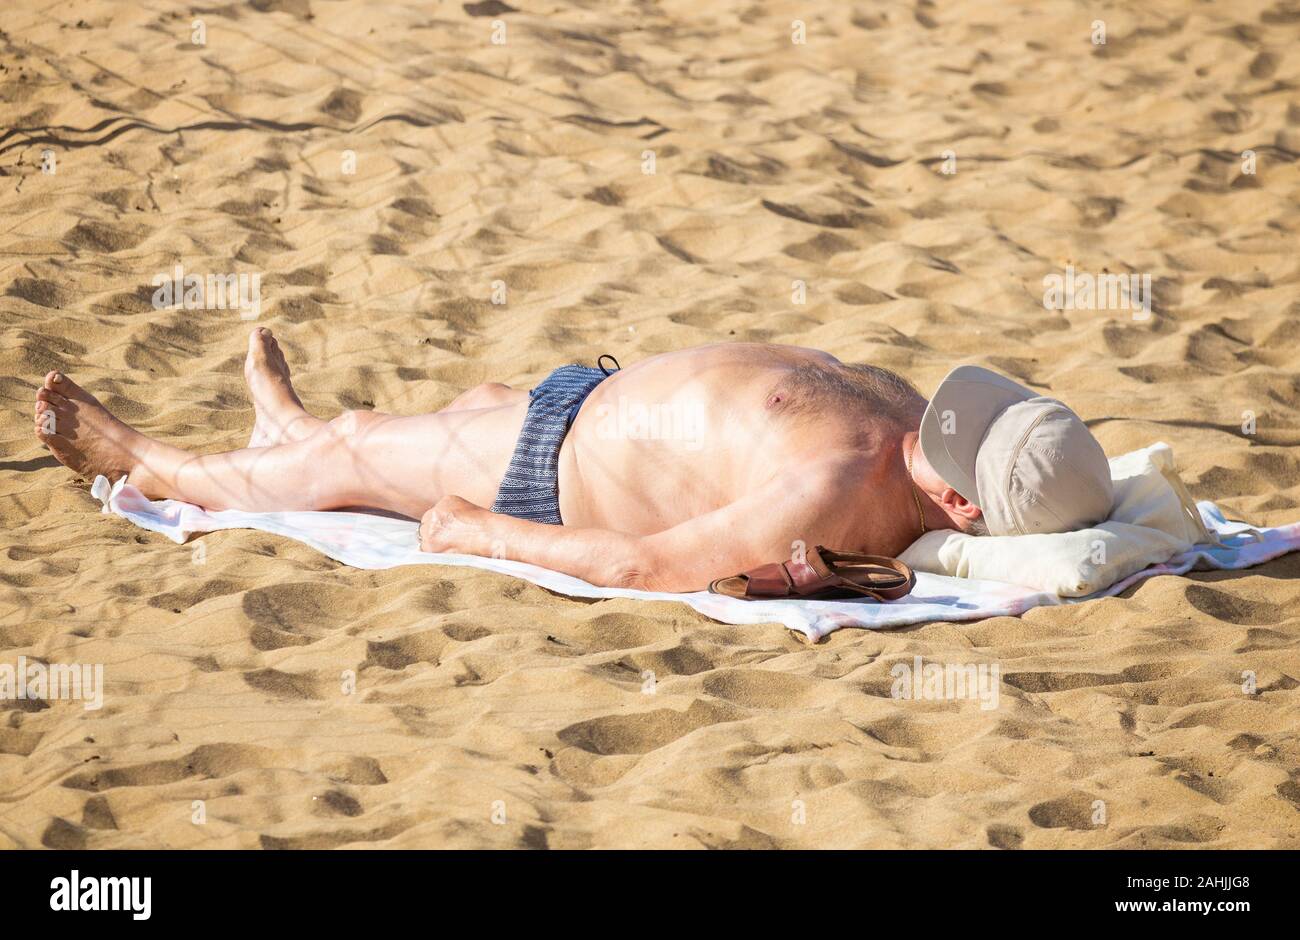 Tourists sunbathing on beach in Spain Stock Photo